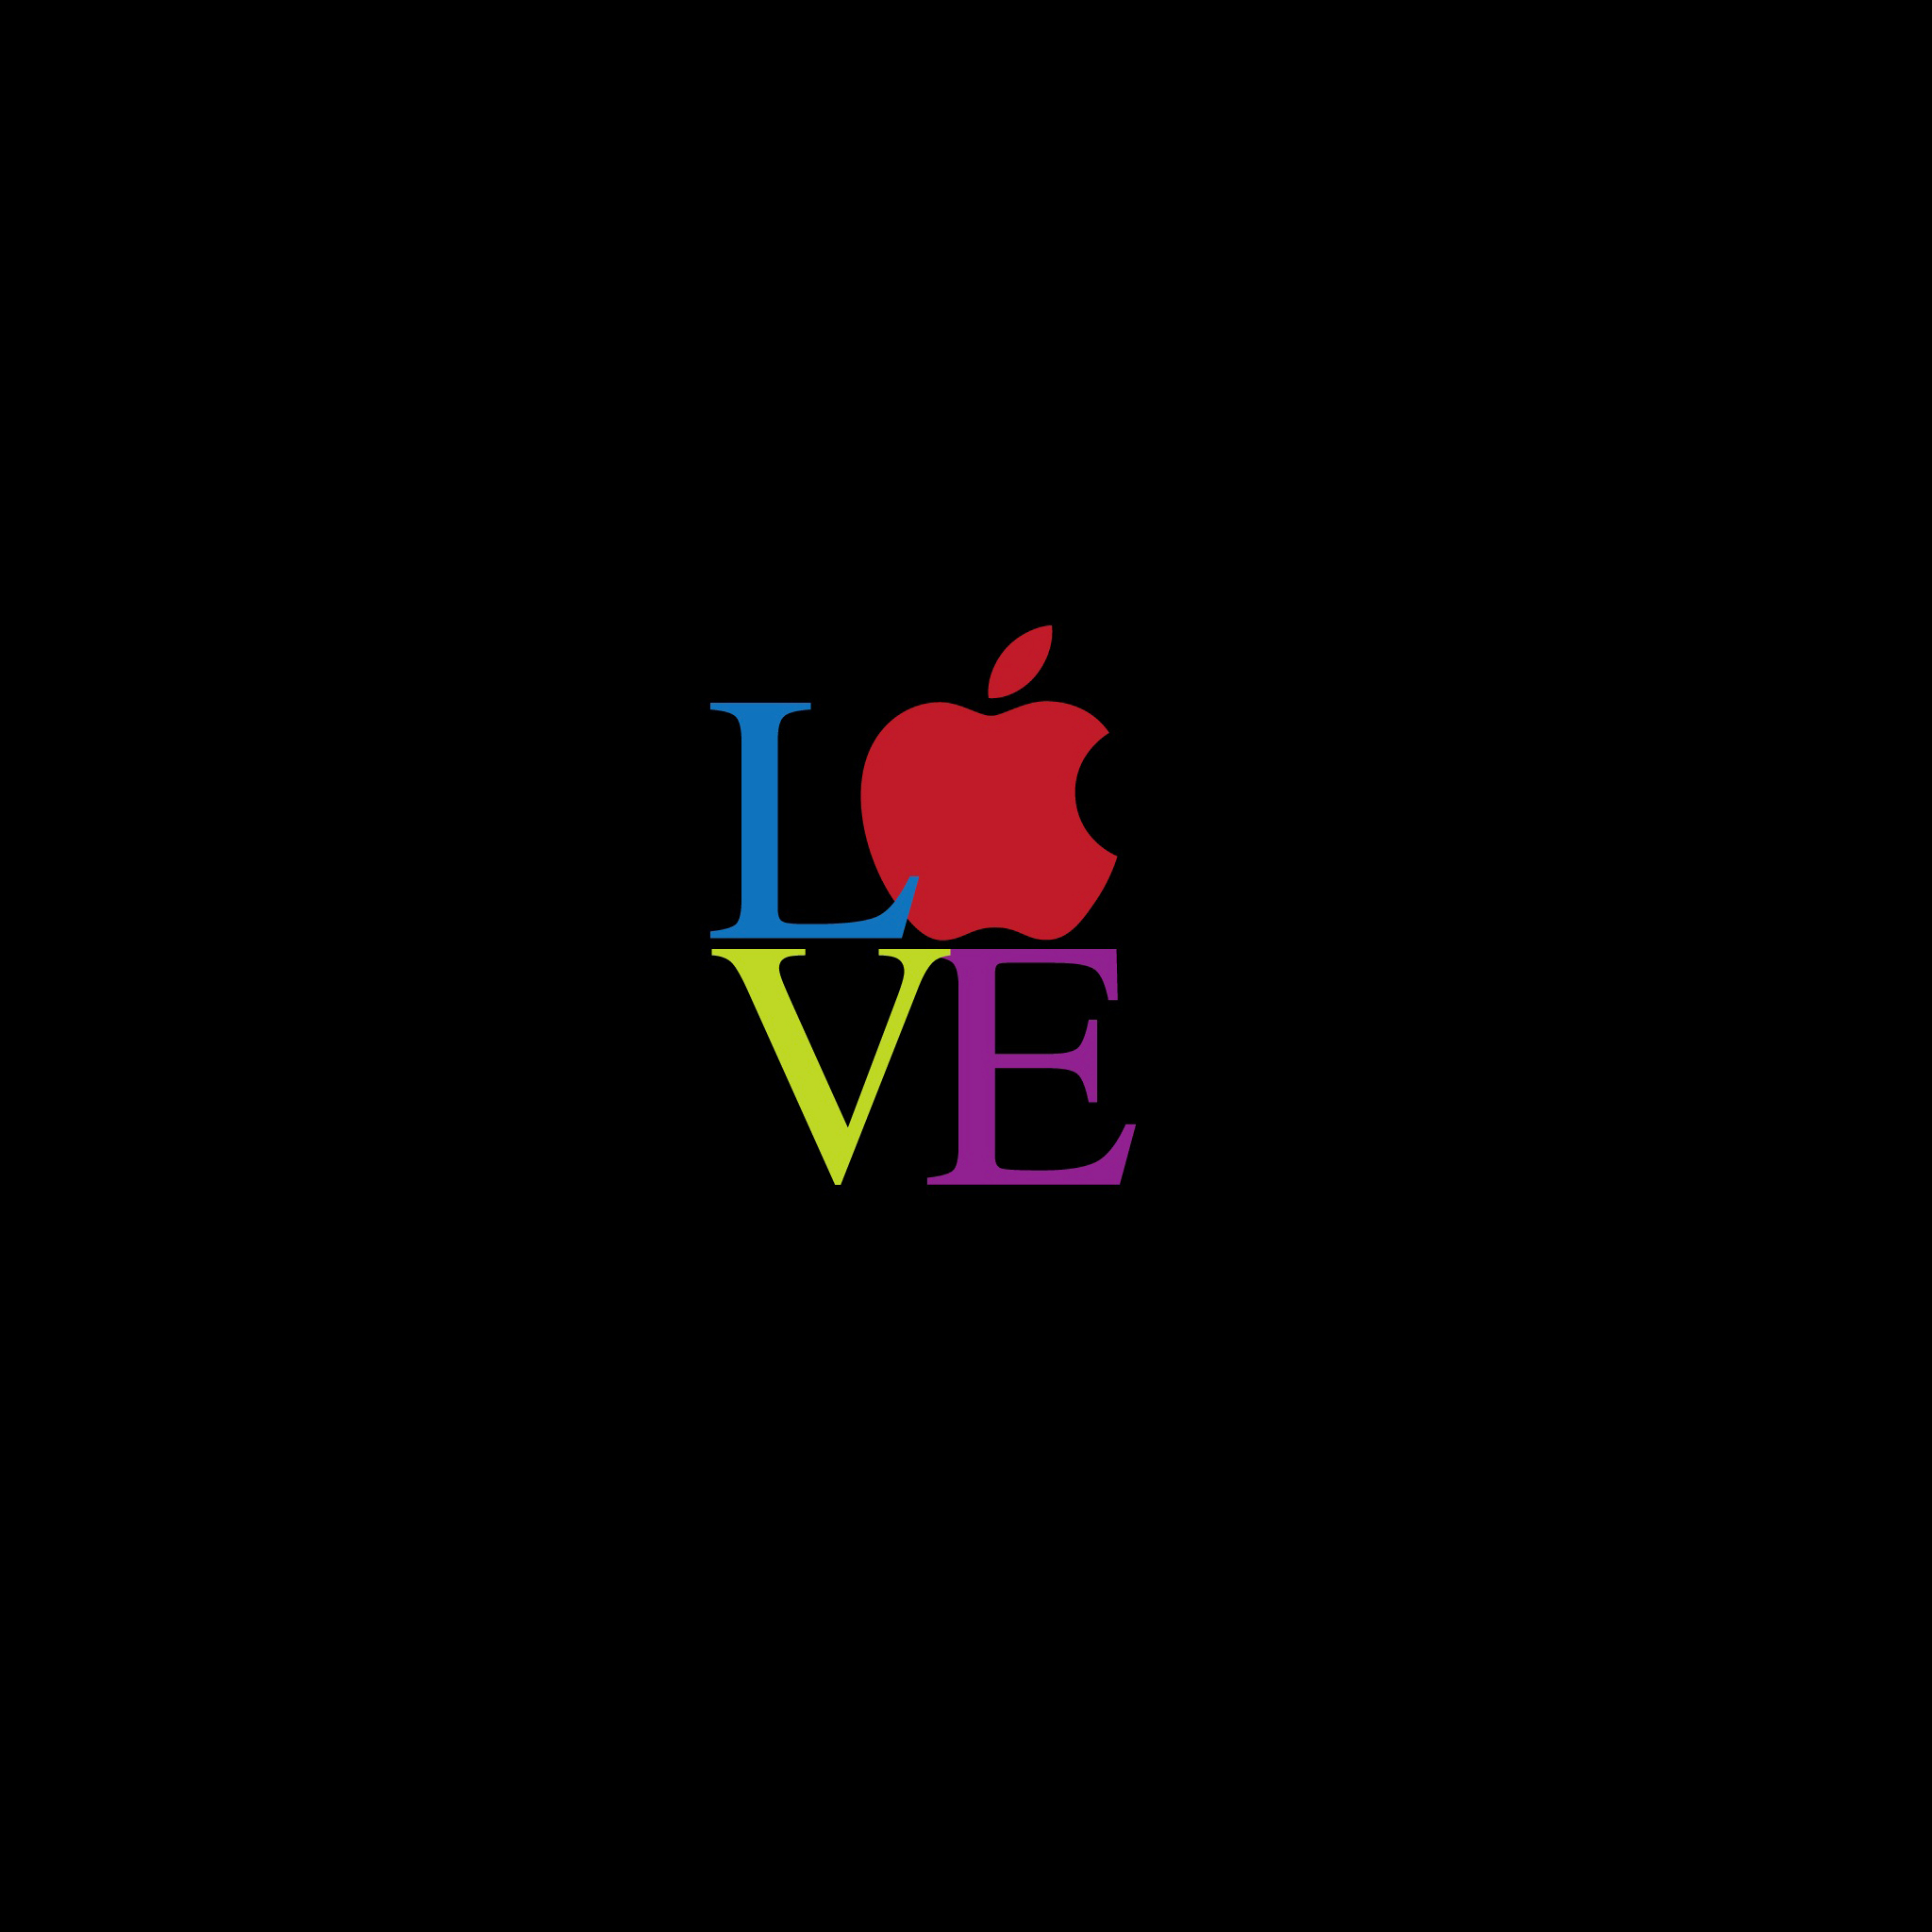 Best Wallpaper For All iPhone Retina Love Apple iPad